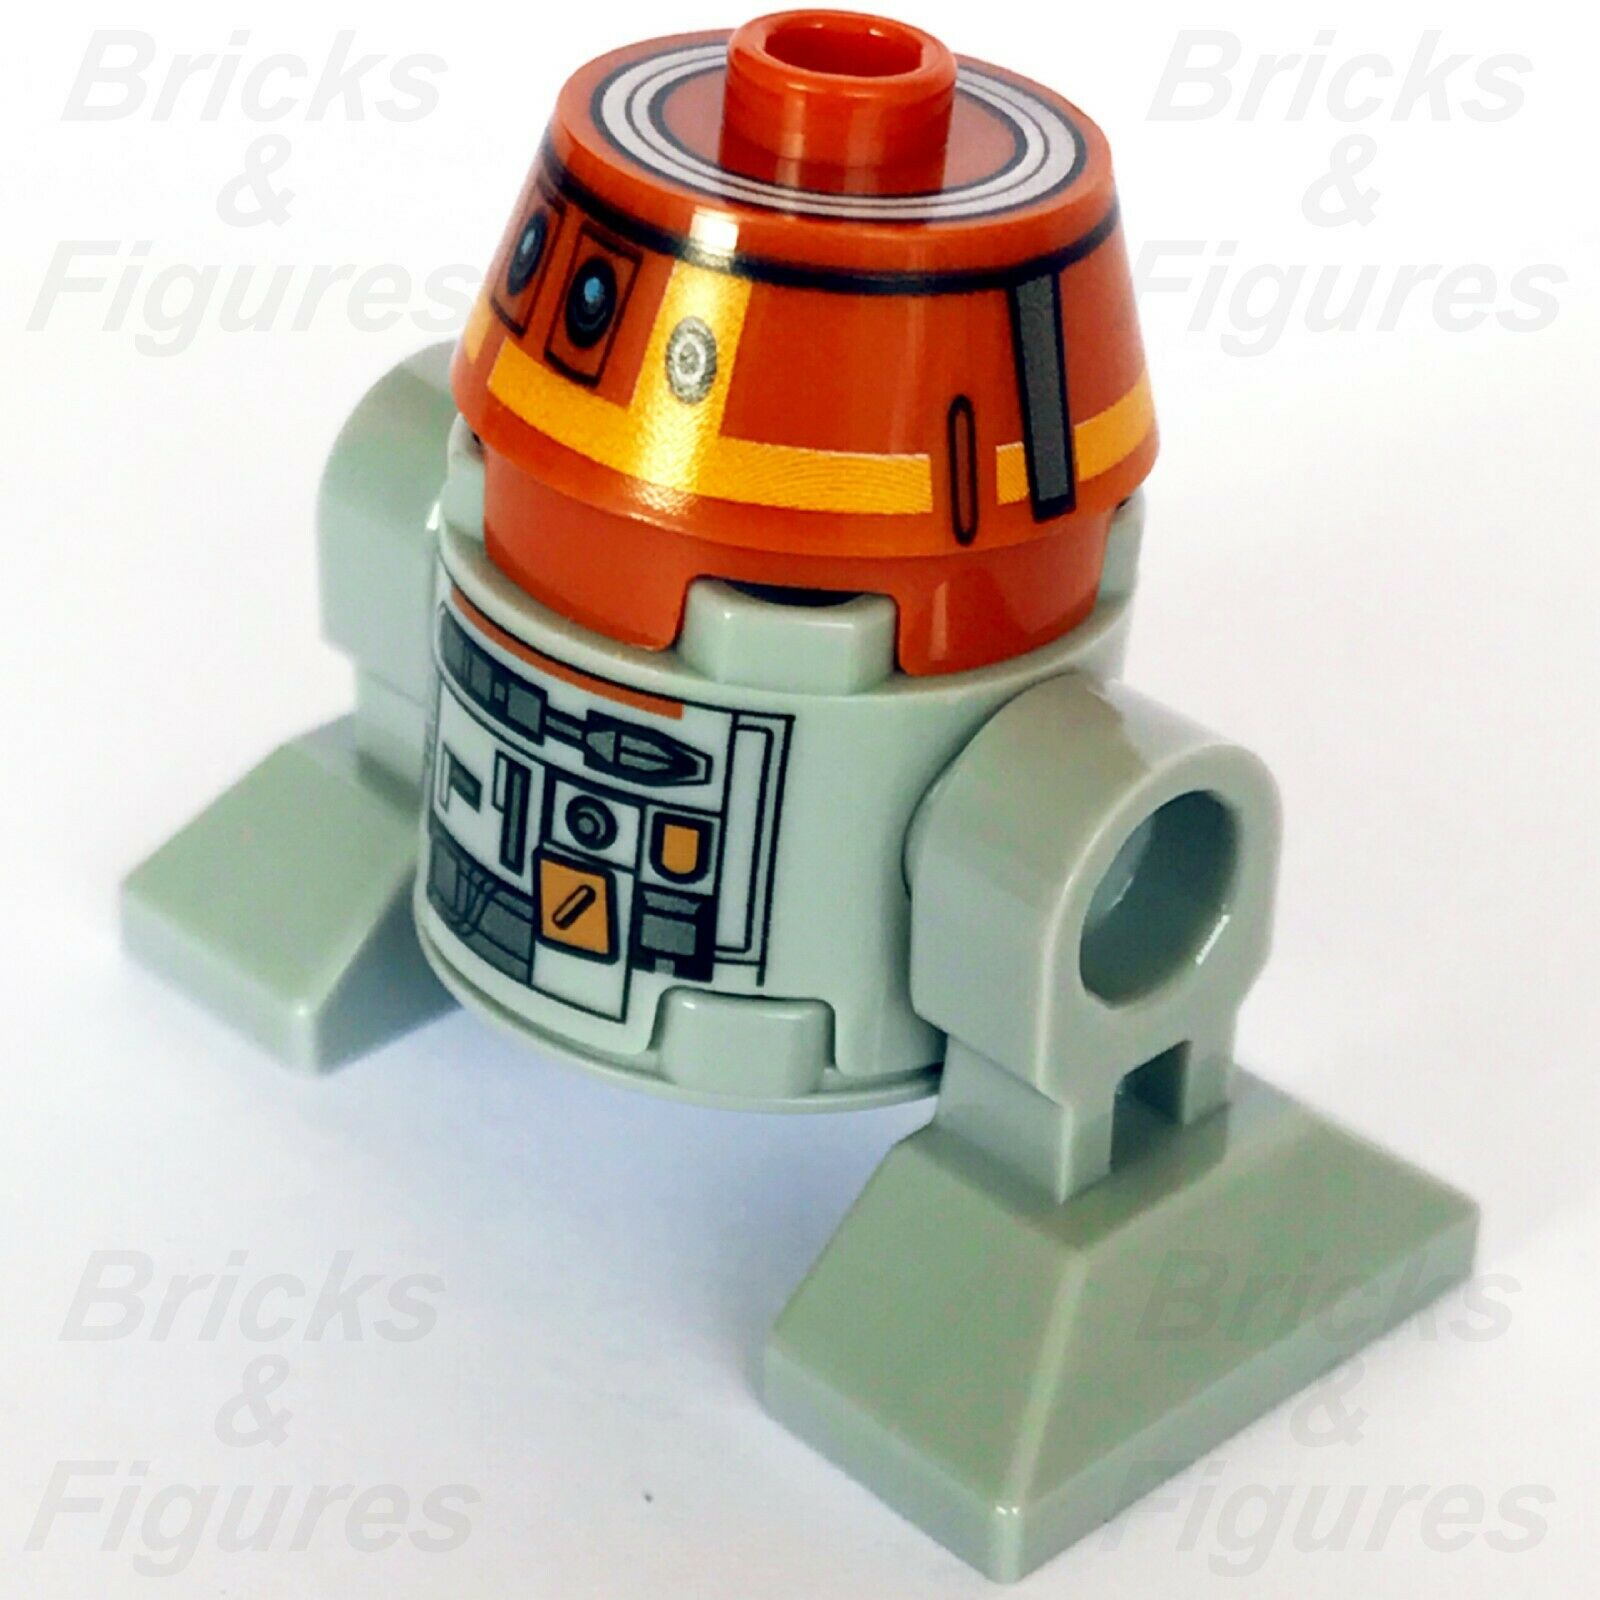 New Star Wars LEGO Chopper C1-10P Droid Rebels Minifigure 75158 75048 75170 - Bricks & Figures